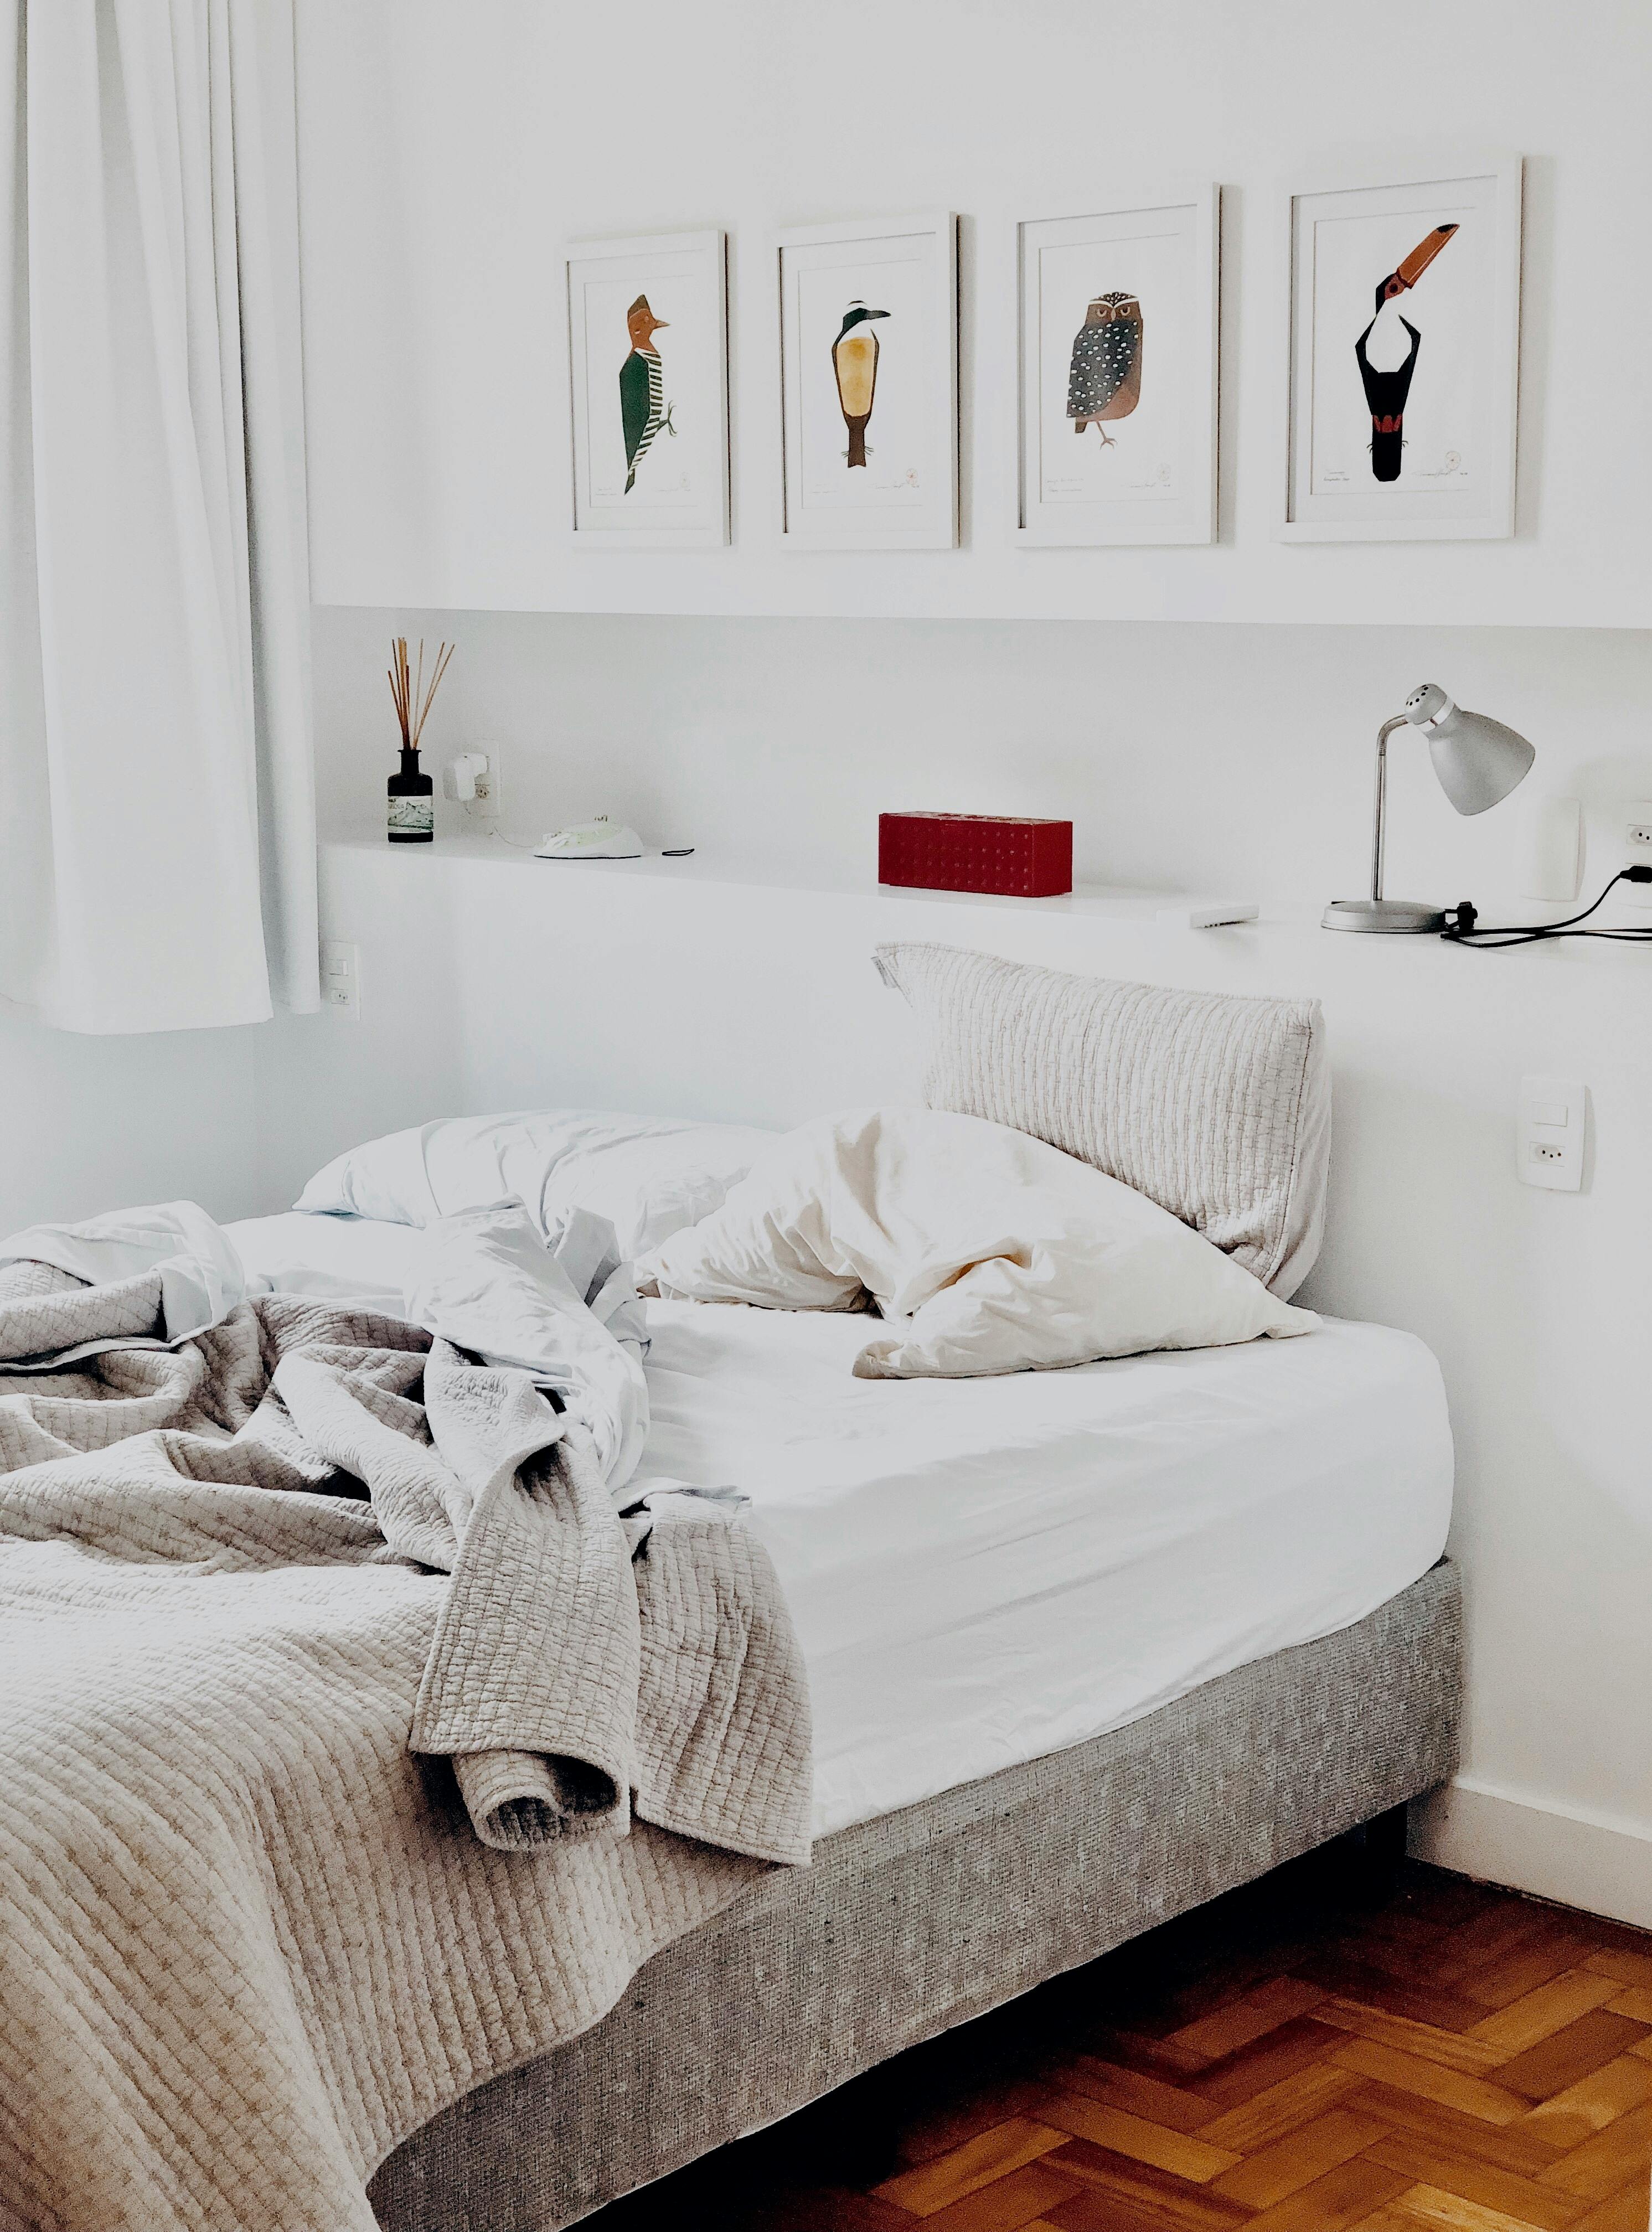 Messy bedroom | Source: Pexels